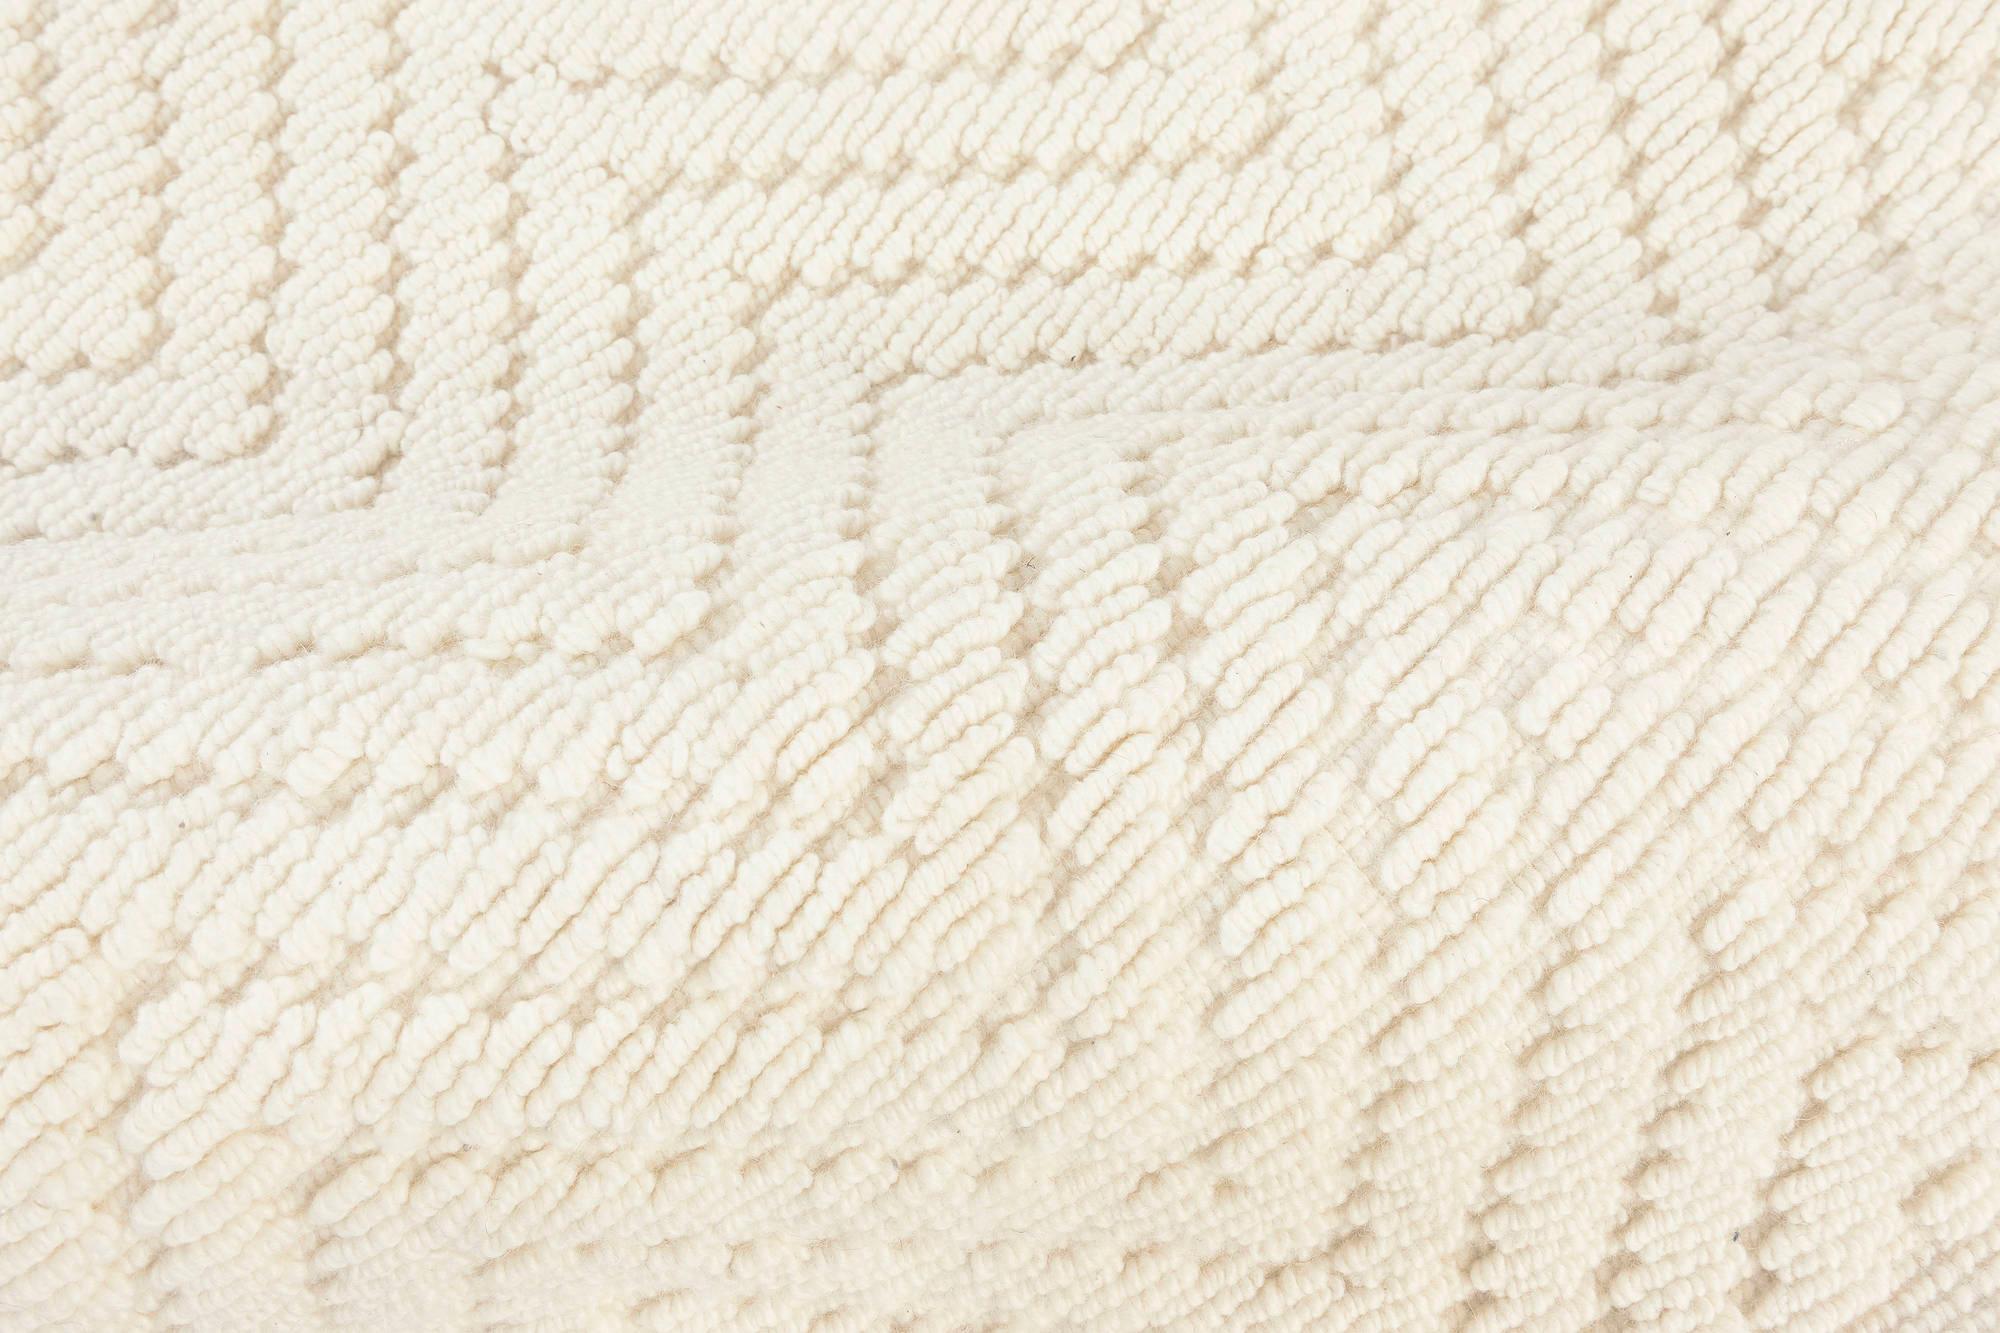 Modern Bauer Collection white herringbone design wool rug by Doris Leslie Blau
Size: 6'9